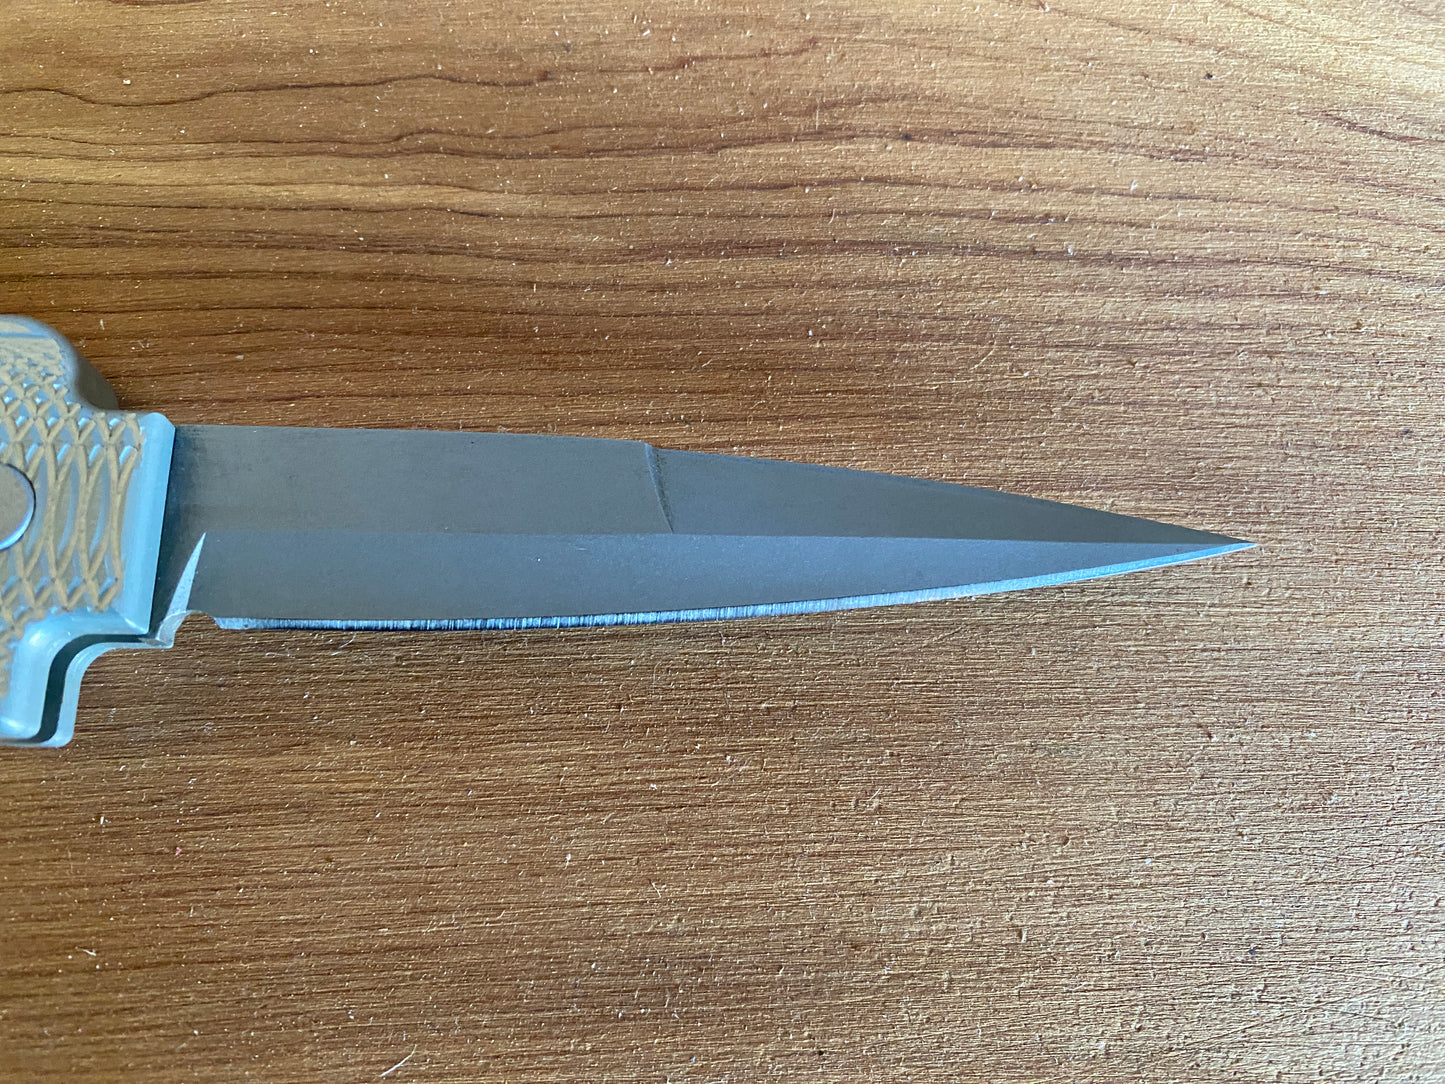 Rob Dalton Companion Model 1 Automatic pocket knife